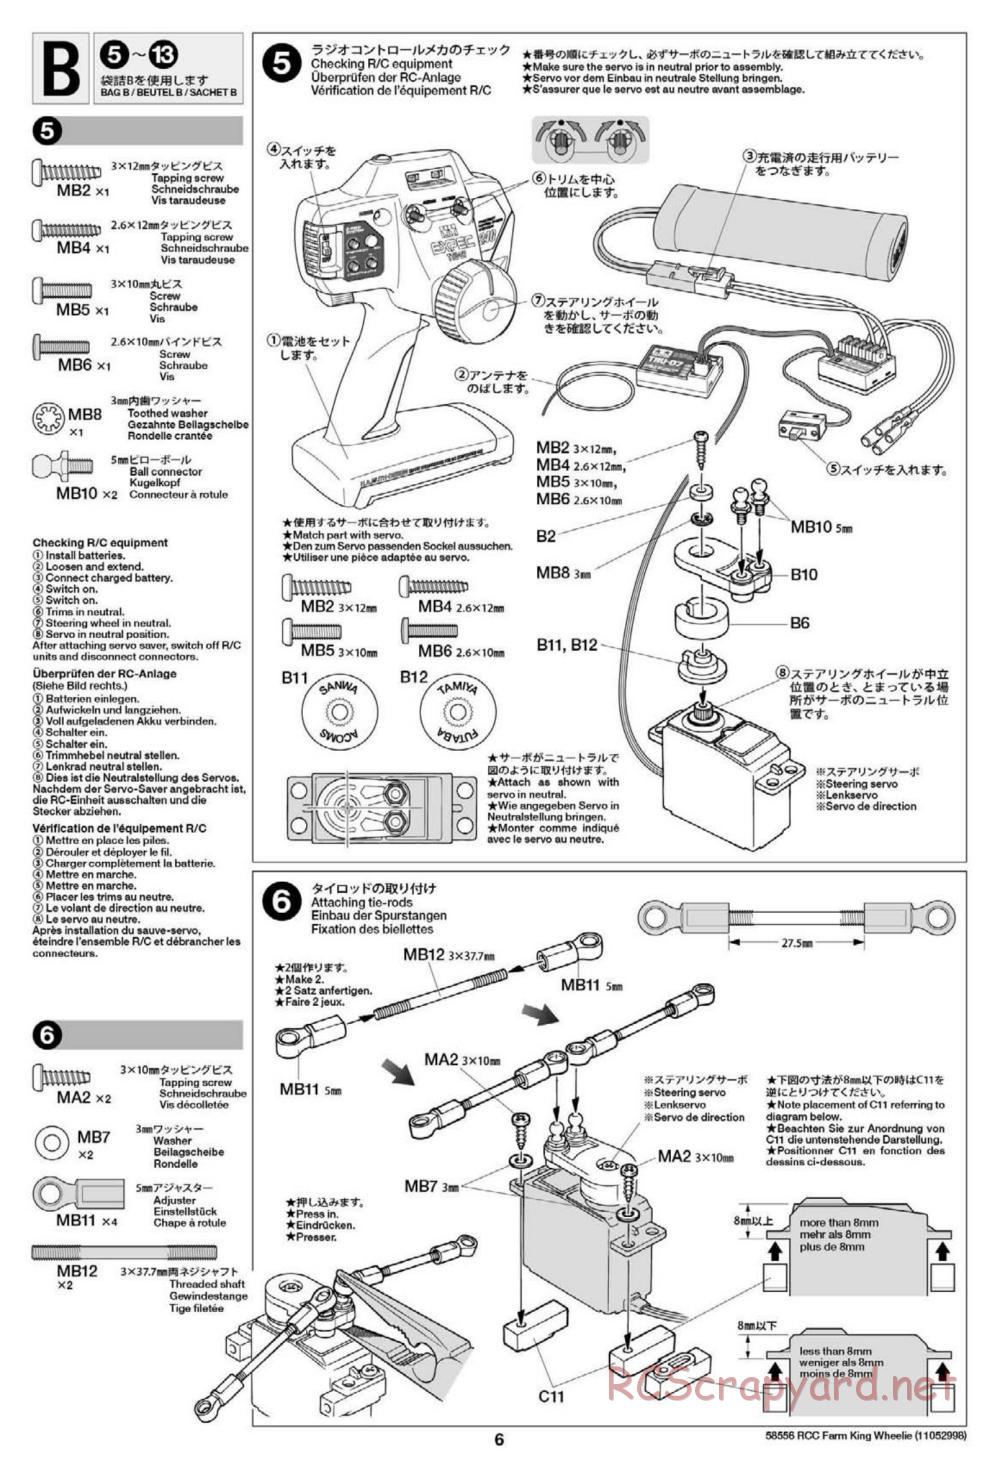 Tamiya - Farm King Wheelie Chassis - Manual - Page 6